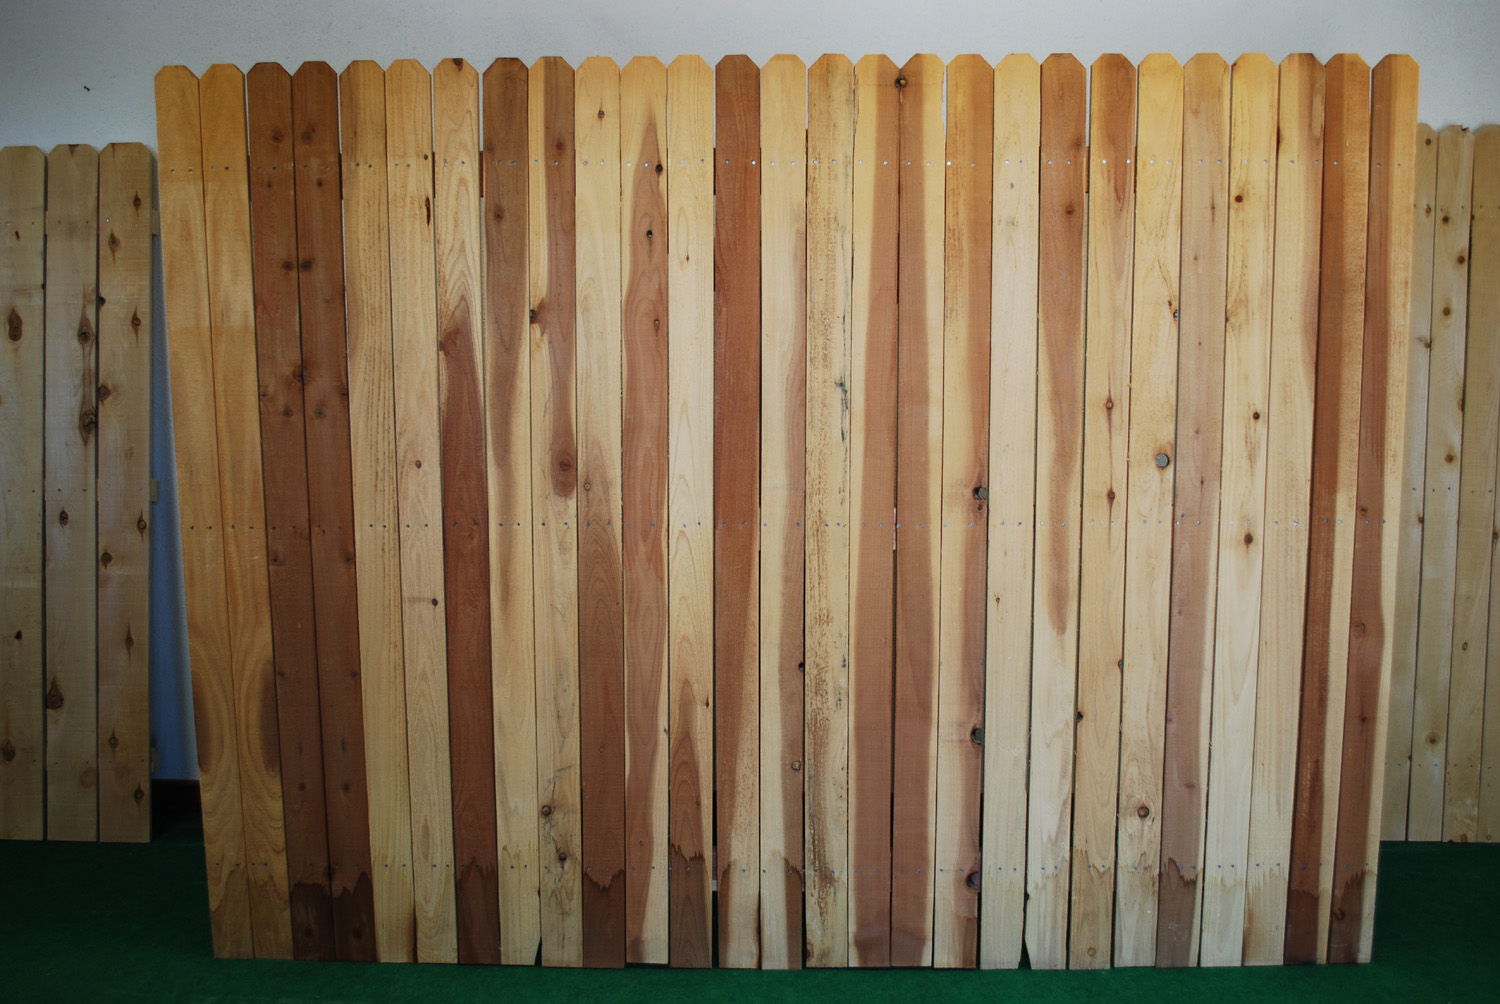 1" x 4" redwood fence panel